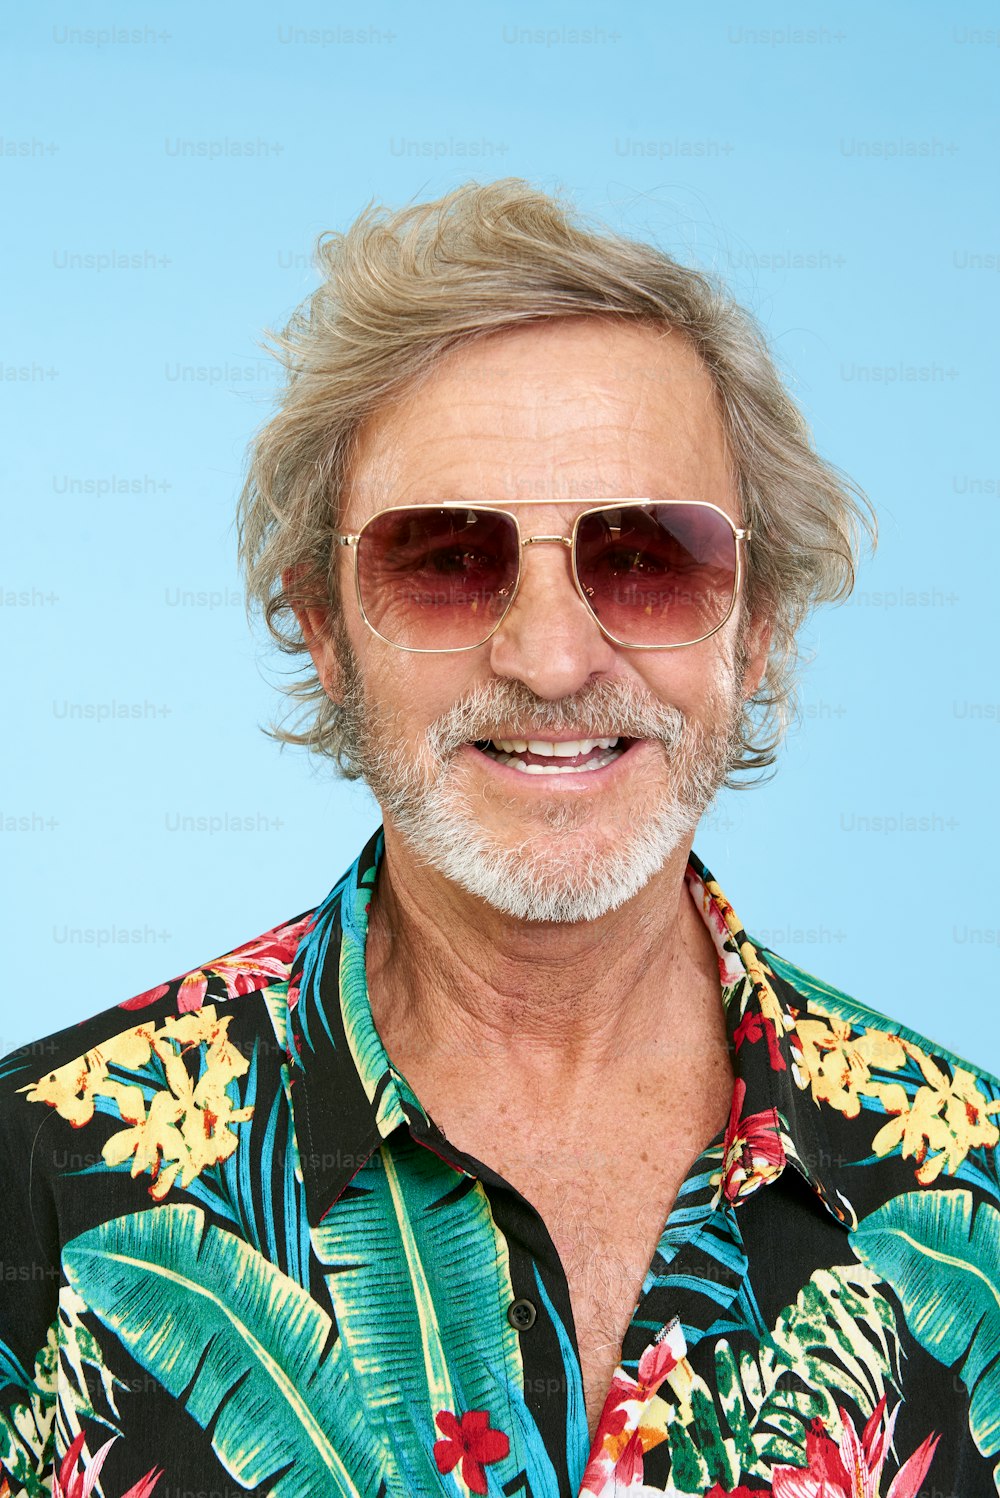 a man wearing a hawaiian shirt and sunglasses